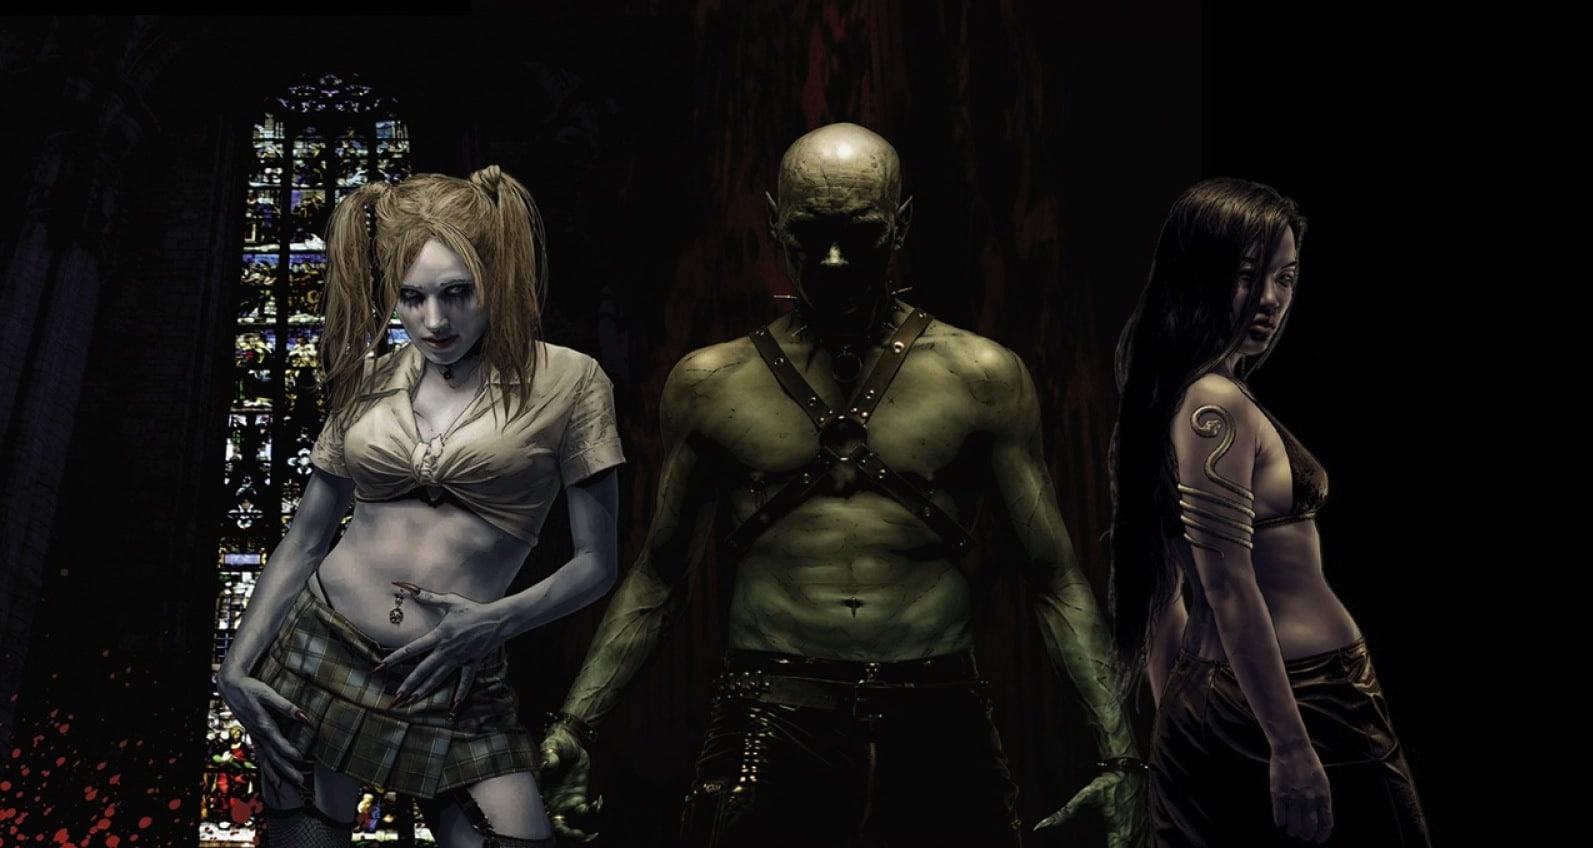 Vampire The Masquerade annuncio 2019 datat uscita lancio gdc trailer